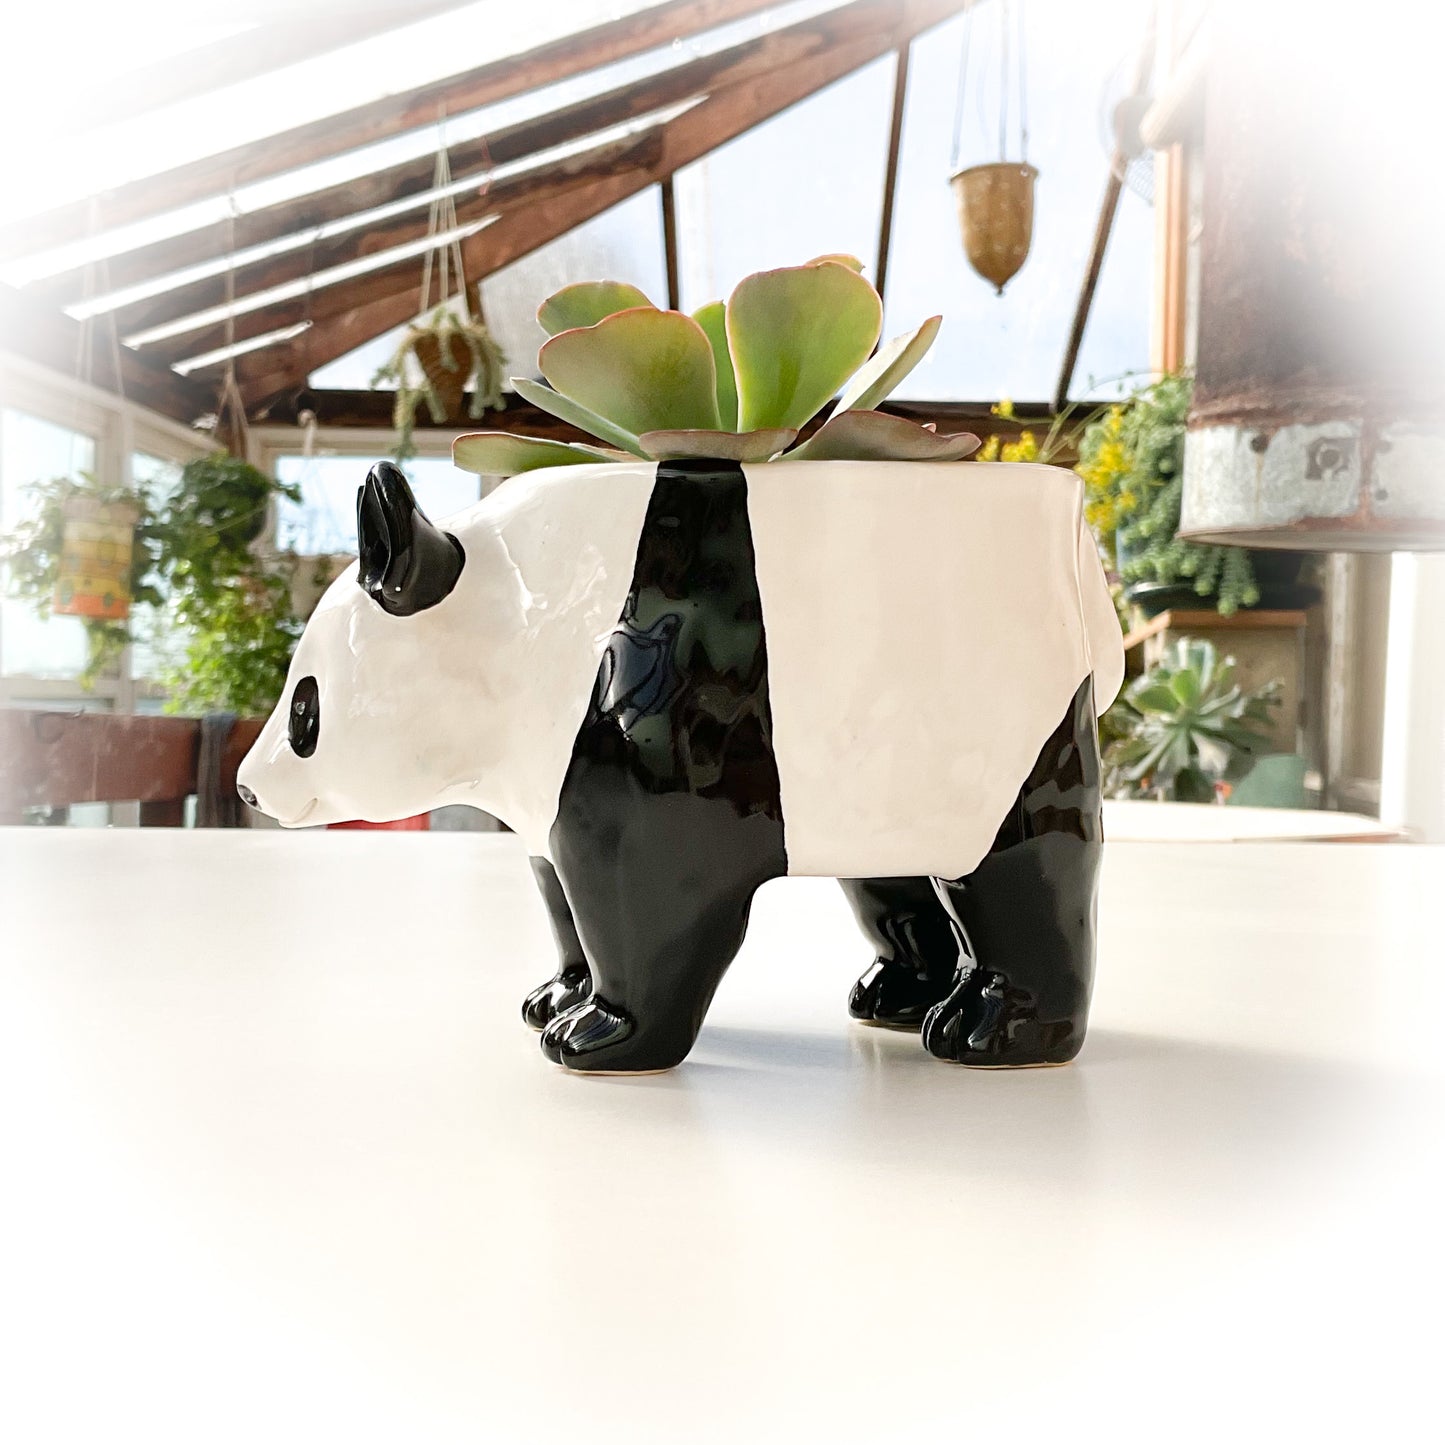 Giant Panda Pot - Ceramic Panda Bear Planter